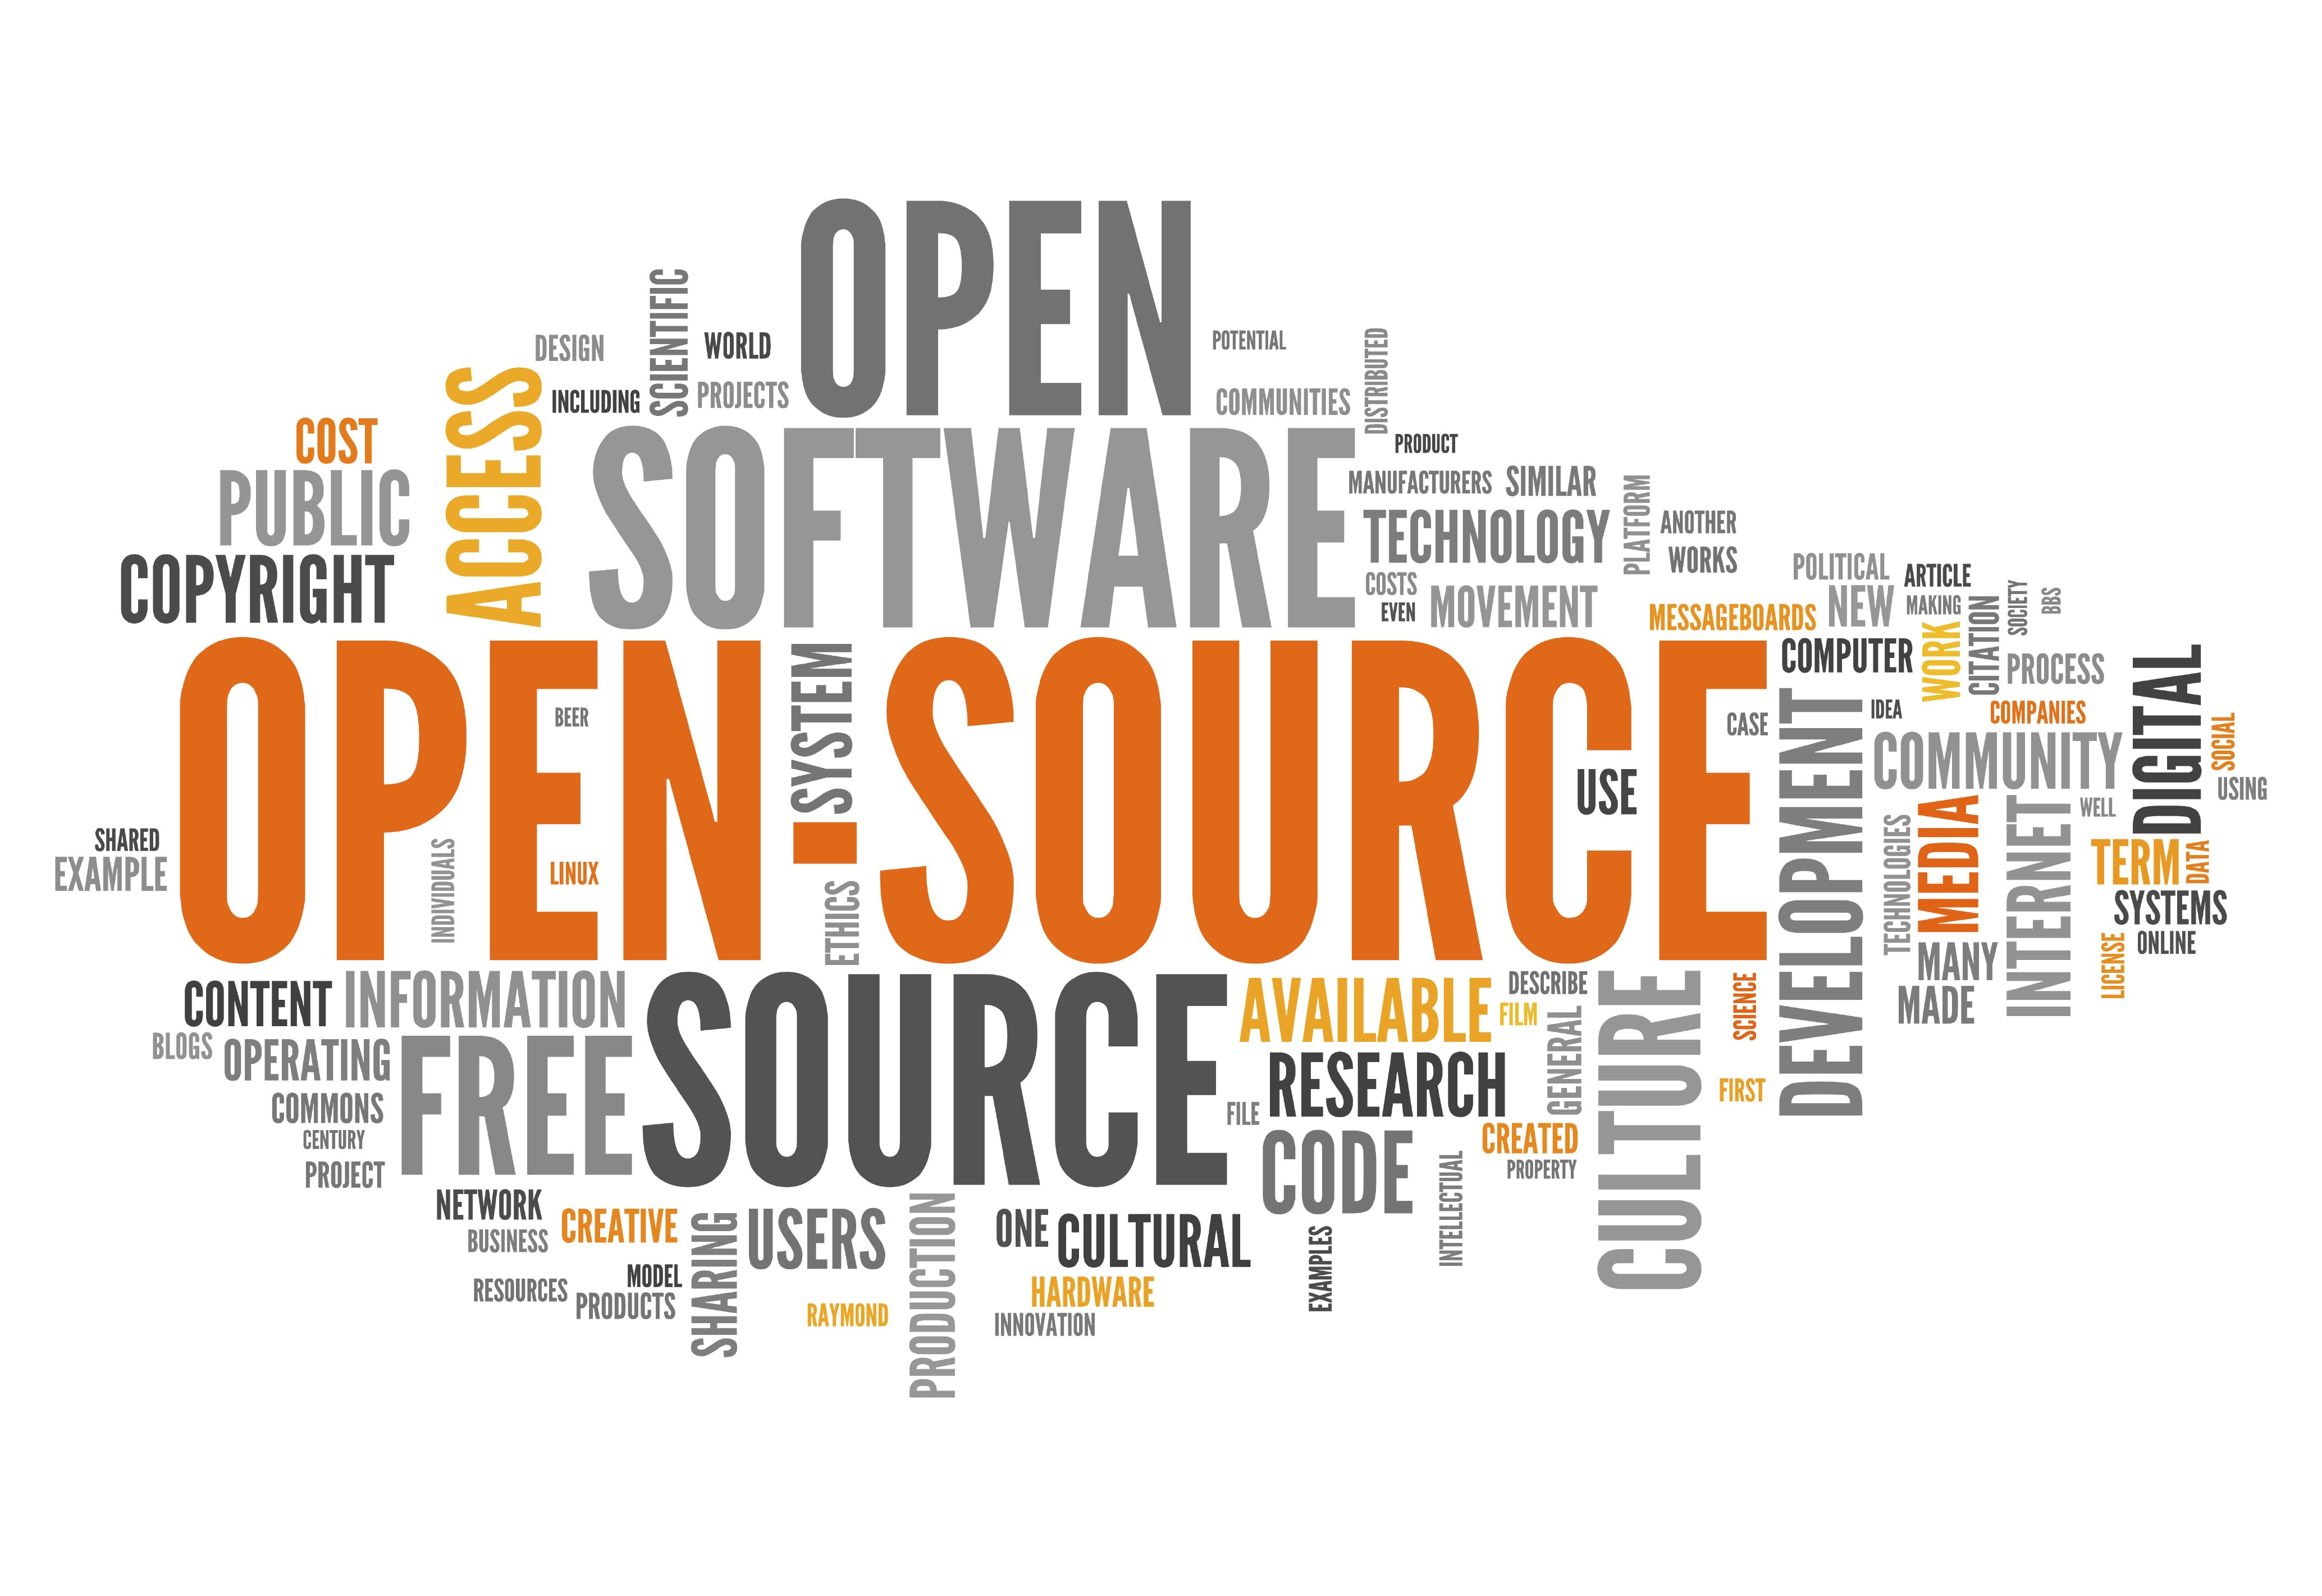 Seafile ist Open Source und proprietäre Software